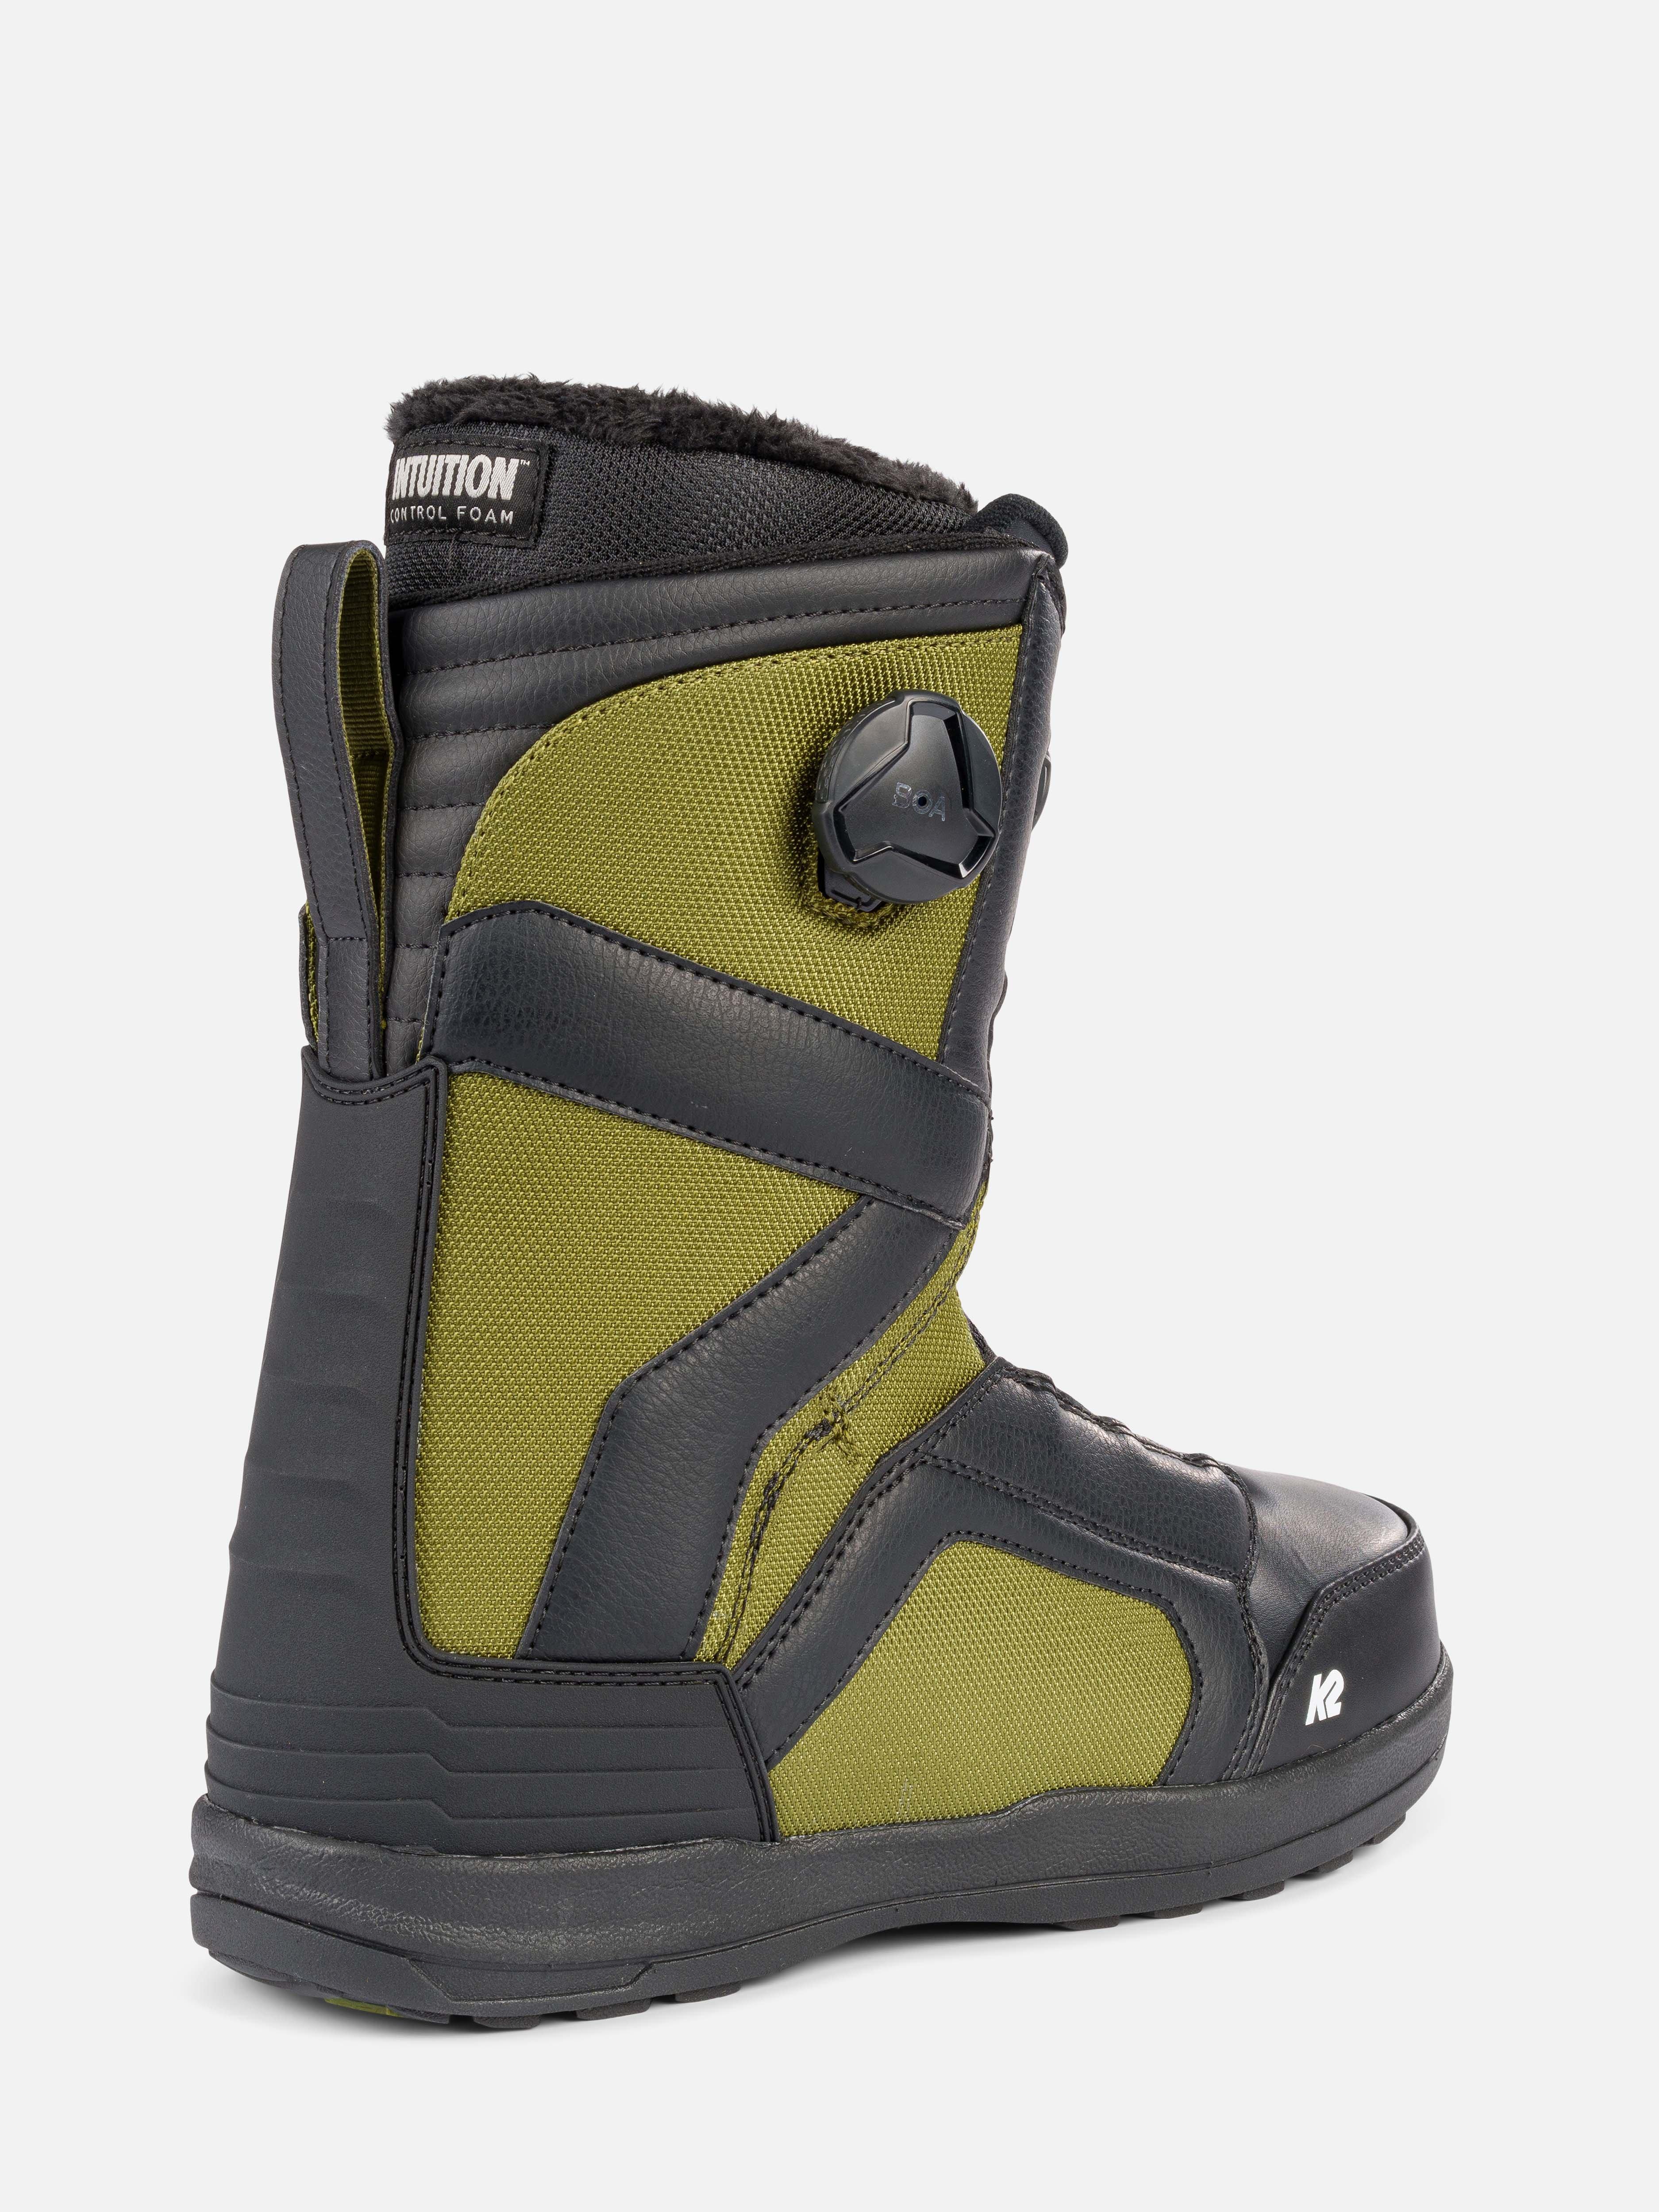 特価K2 Snowboards Boundary Snowboard Boots 26.0並行輸入商品 通販 